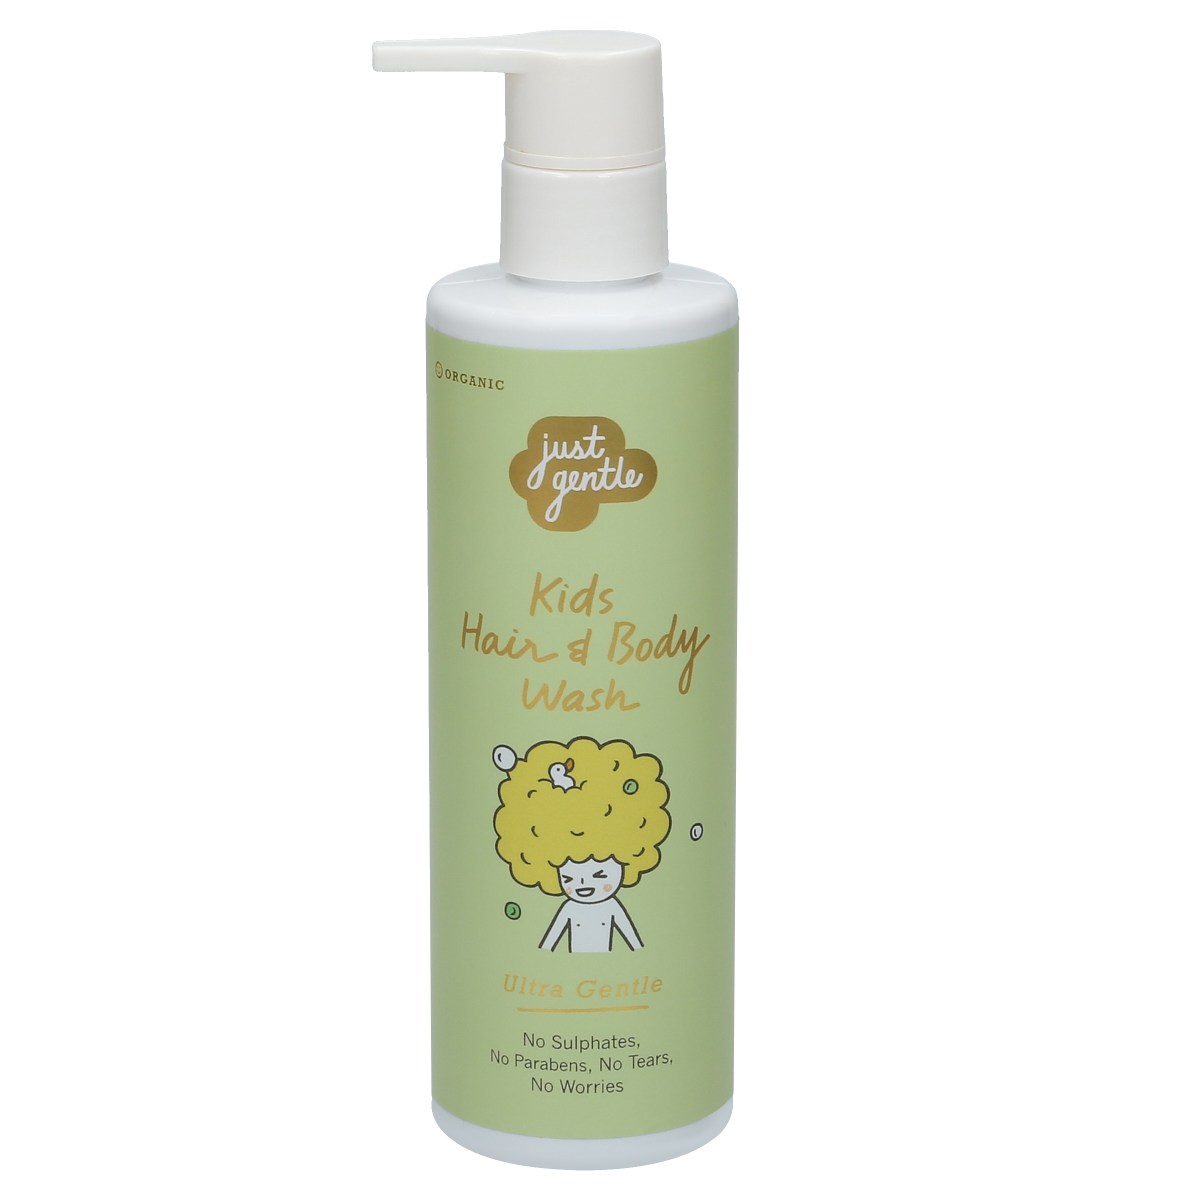 Just Gentle - Kids Hair & Body Wash - Ultra Gentle